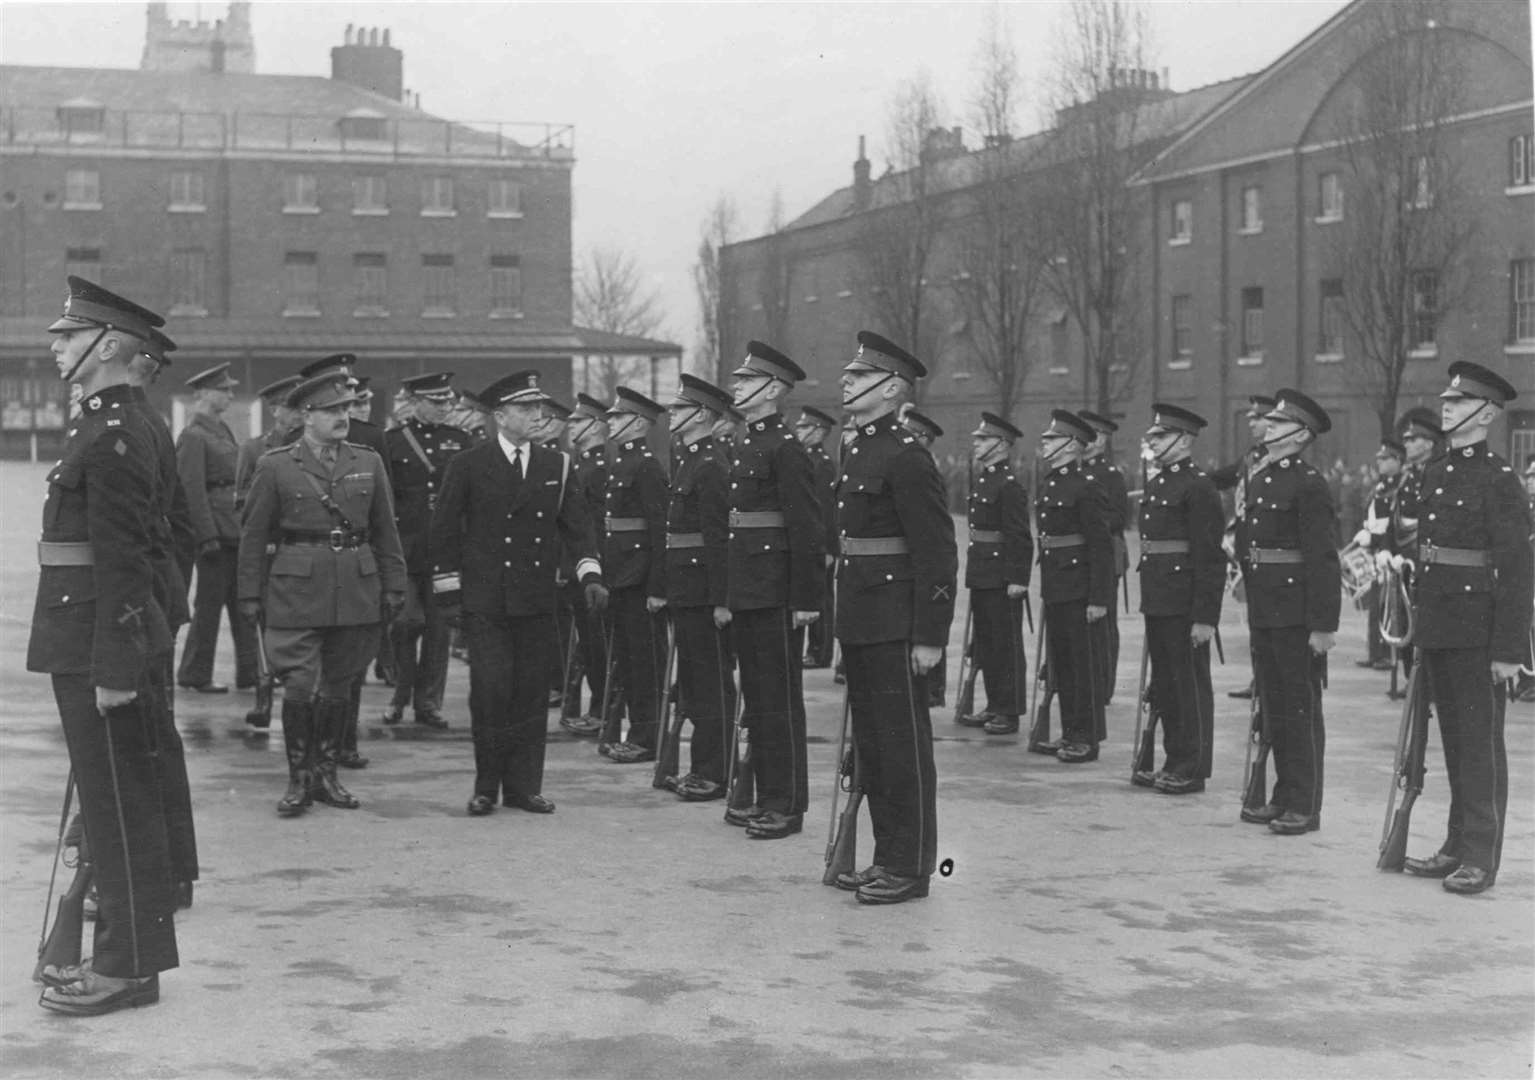 Chatham Royal Marines’ Barracks in 1942, previously Melville Hospital